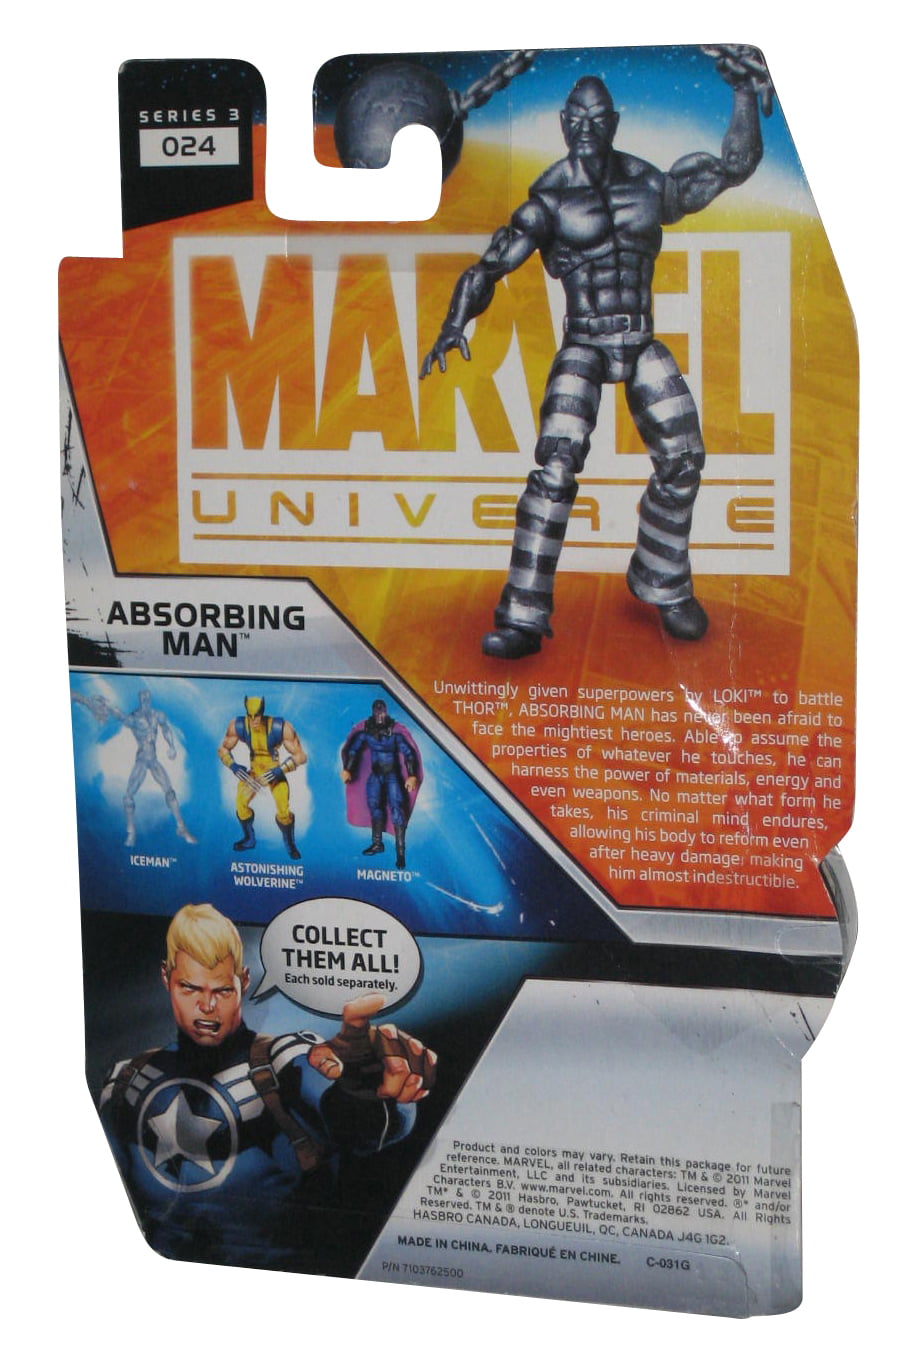 Marvel Universe ABSORBING MAN Figure #24